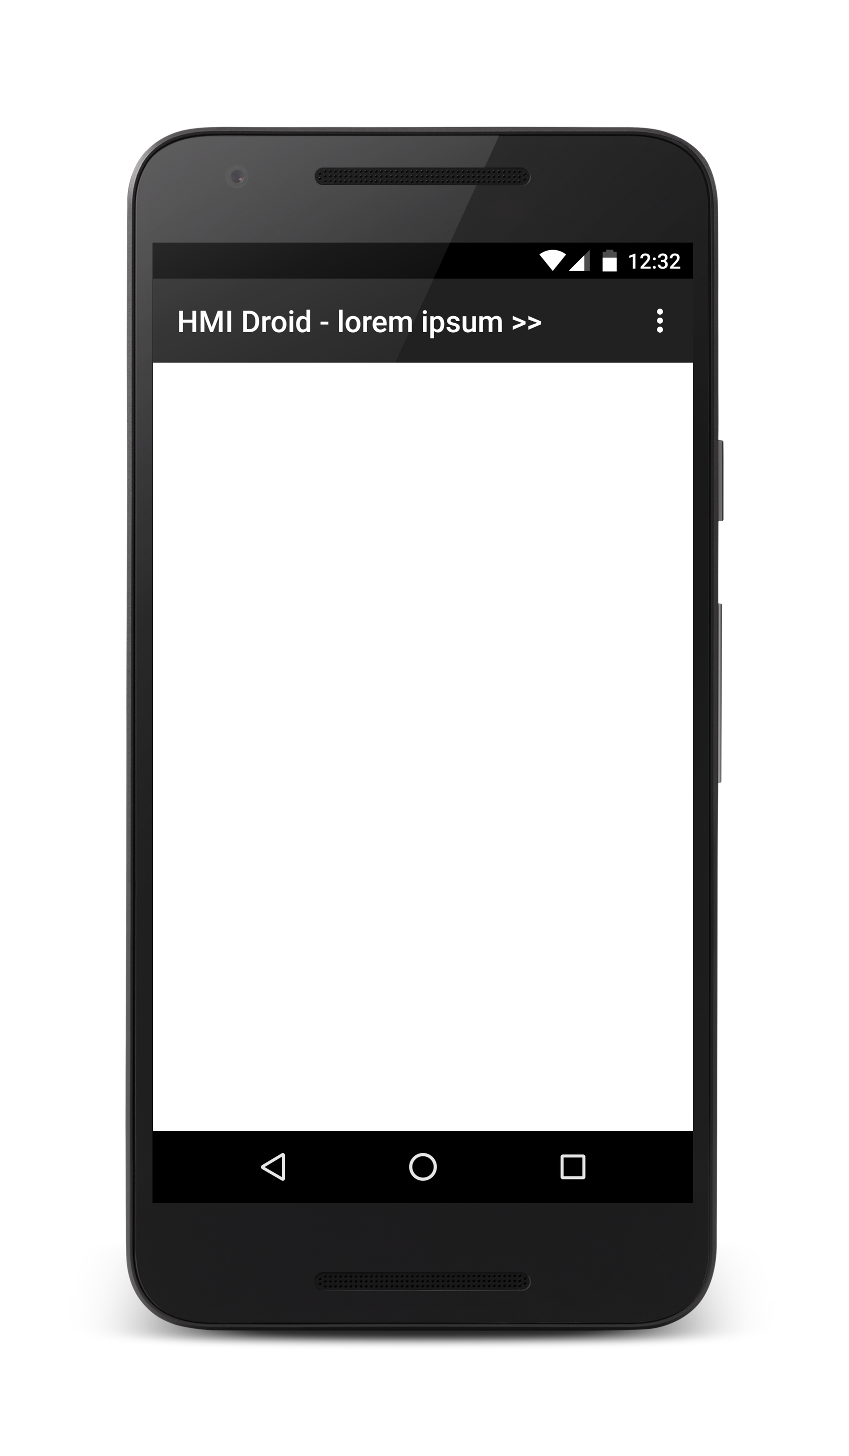 HMI Droid - Title row